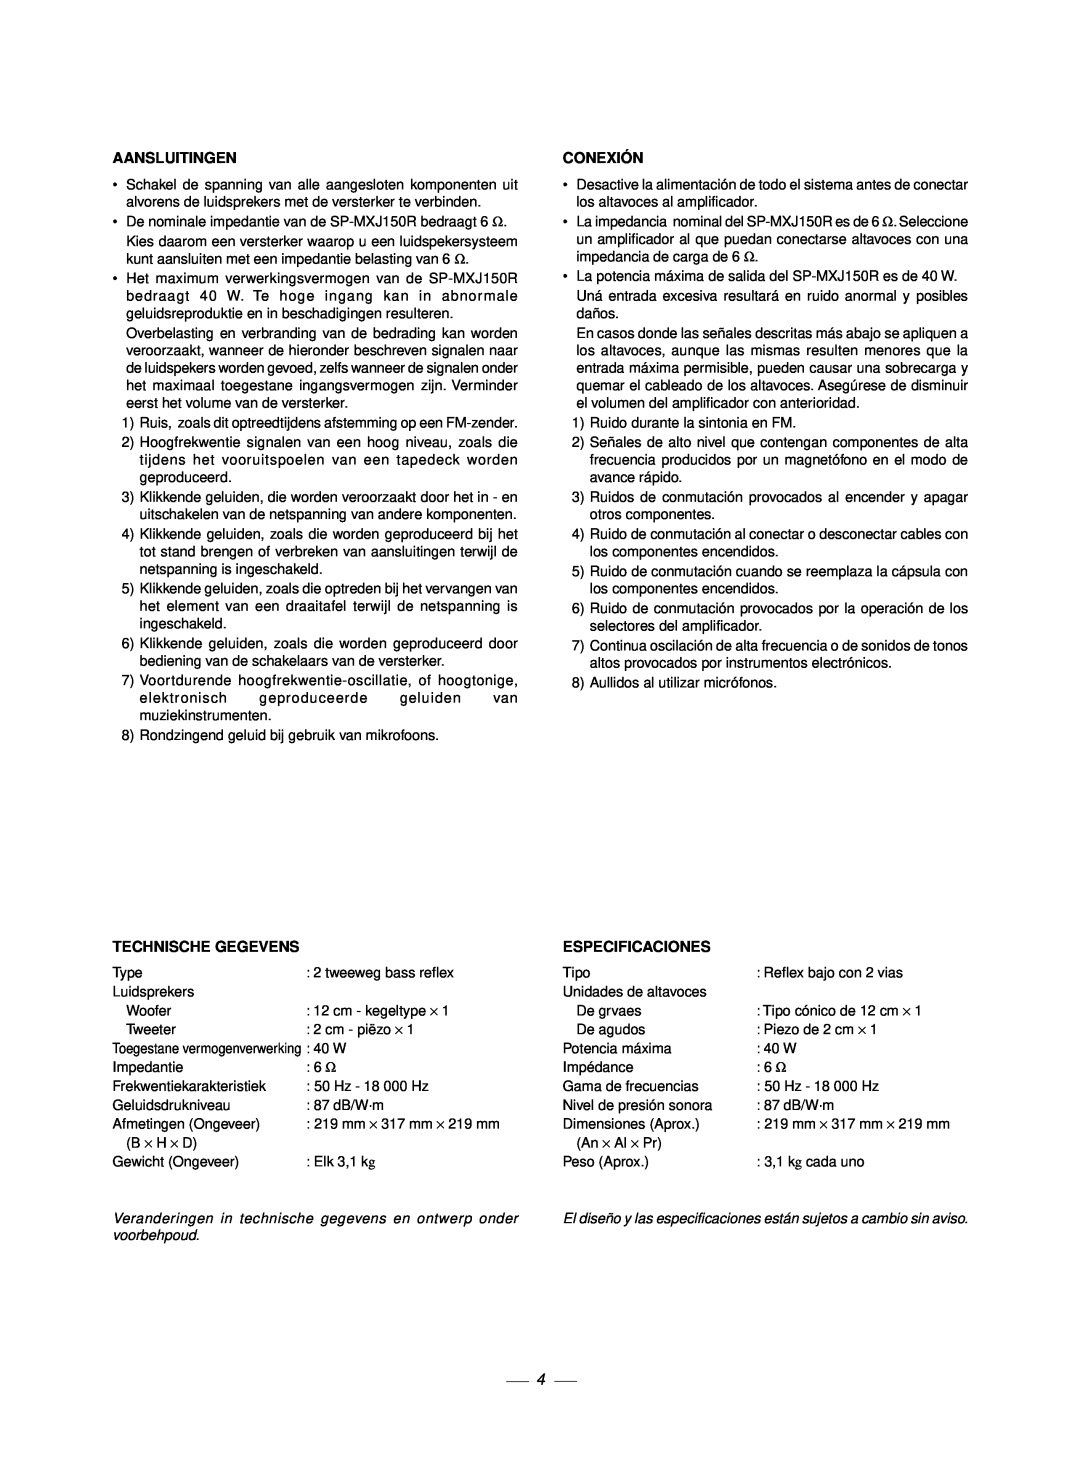 JVC CA-MXJ150R manual Aansluitingen, Conexió N, Technische Gegevens, Especificaciones 